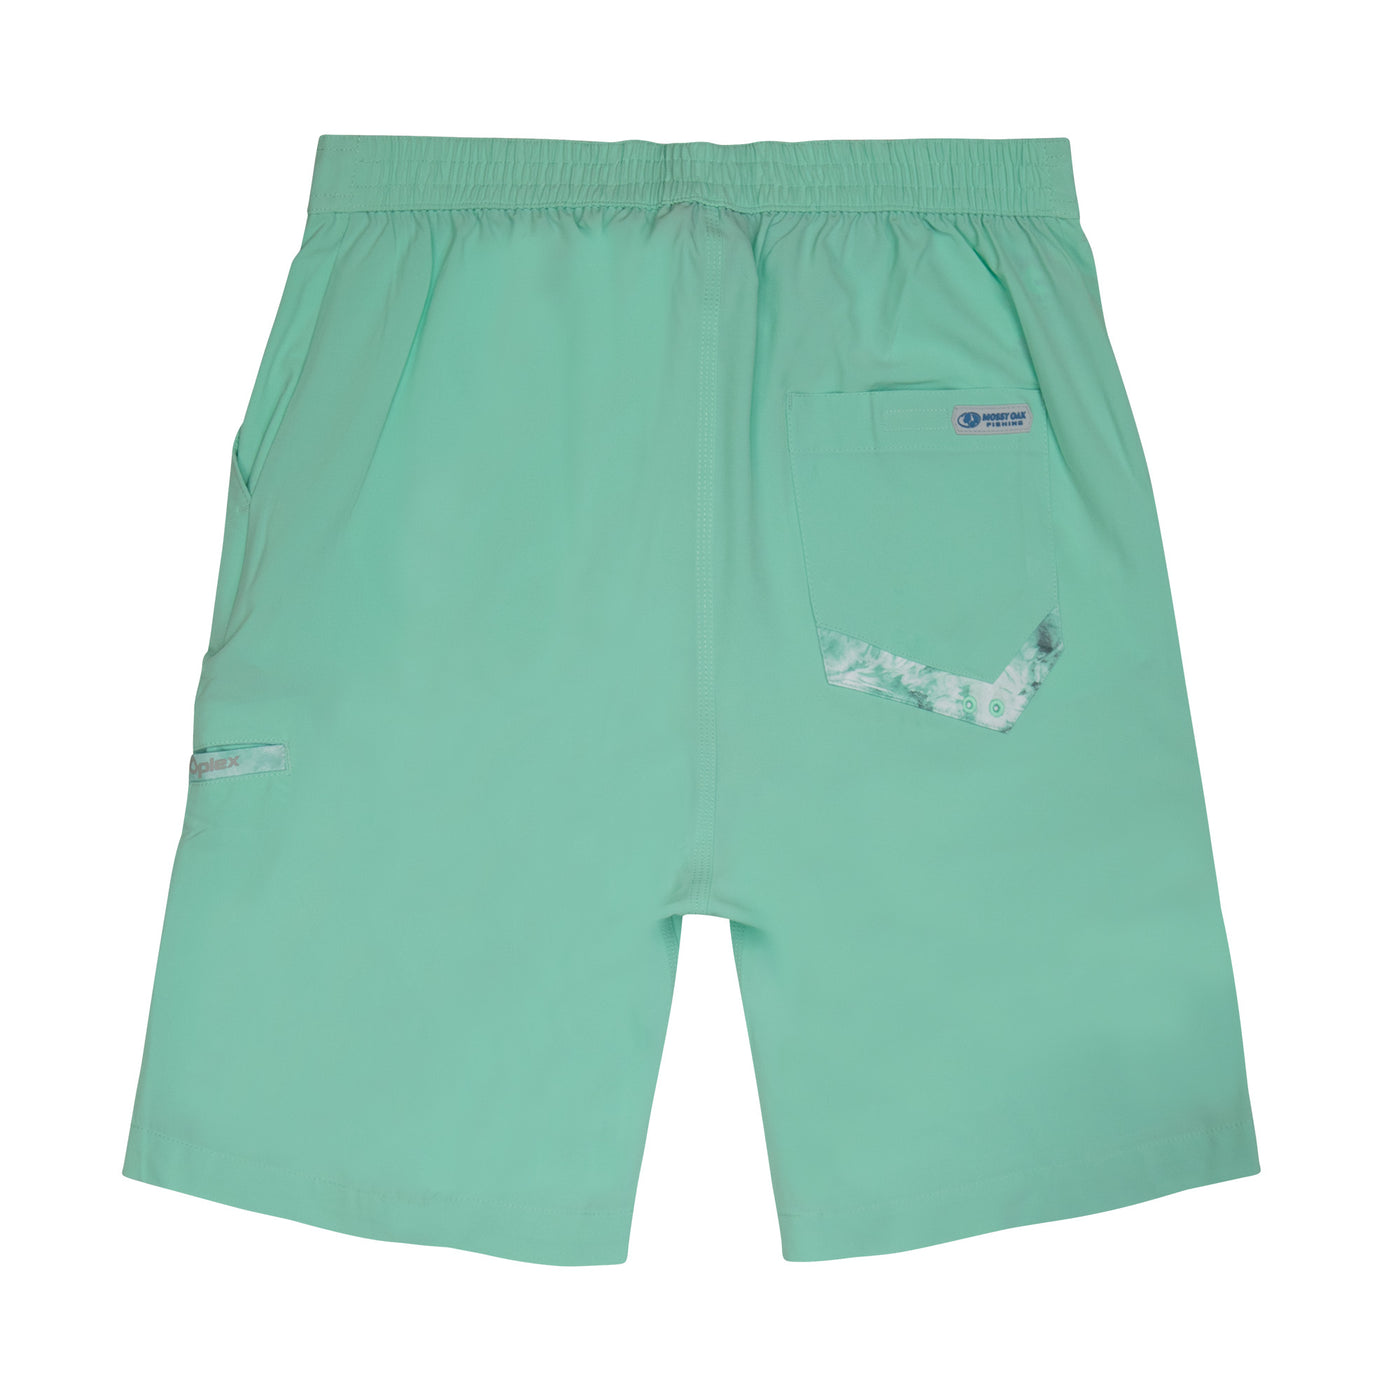 Mossy Oak Fishing & Swim Hybrid Quick Dry Shorts for Men